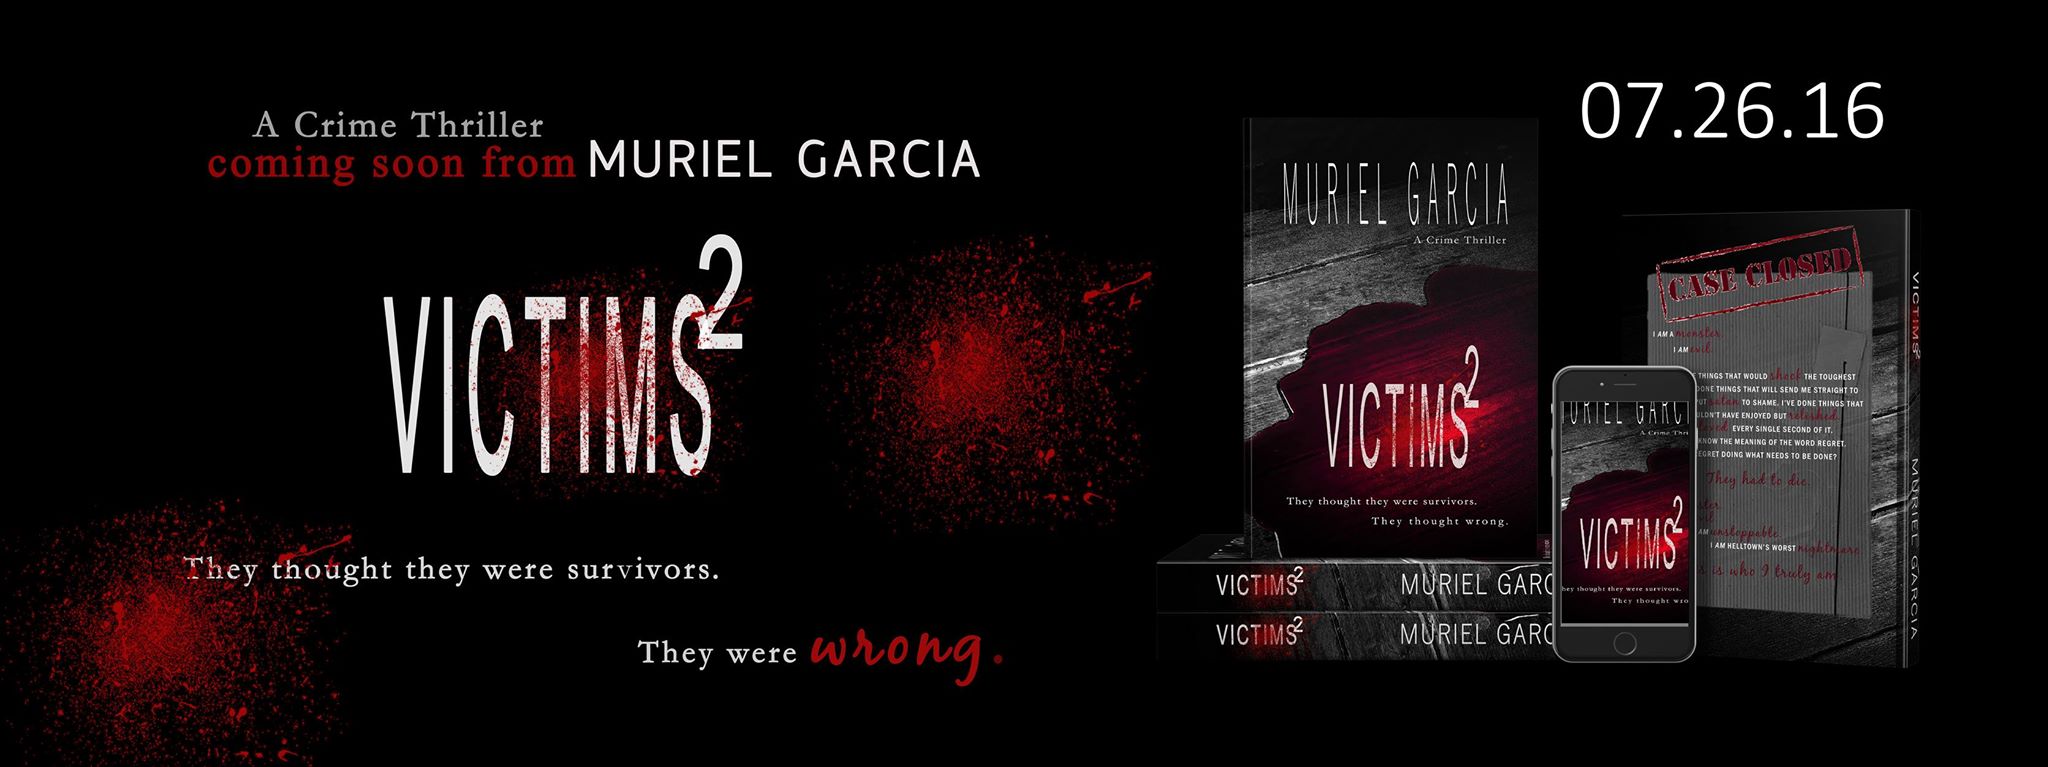 Victims2